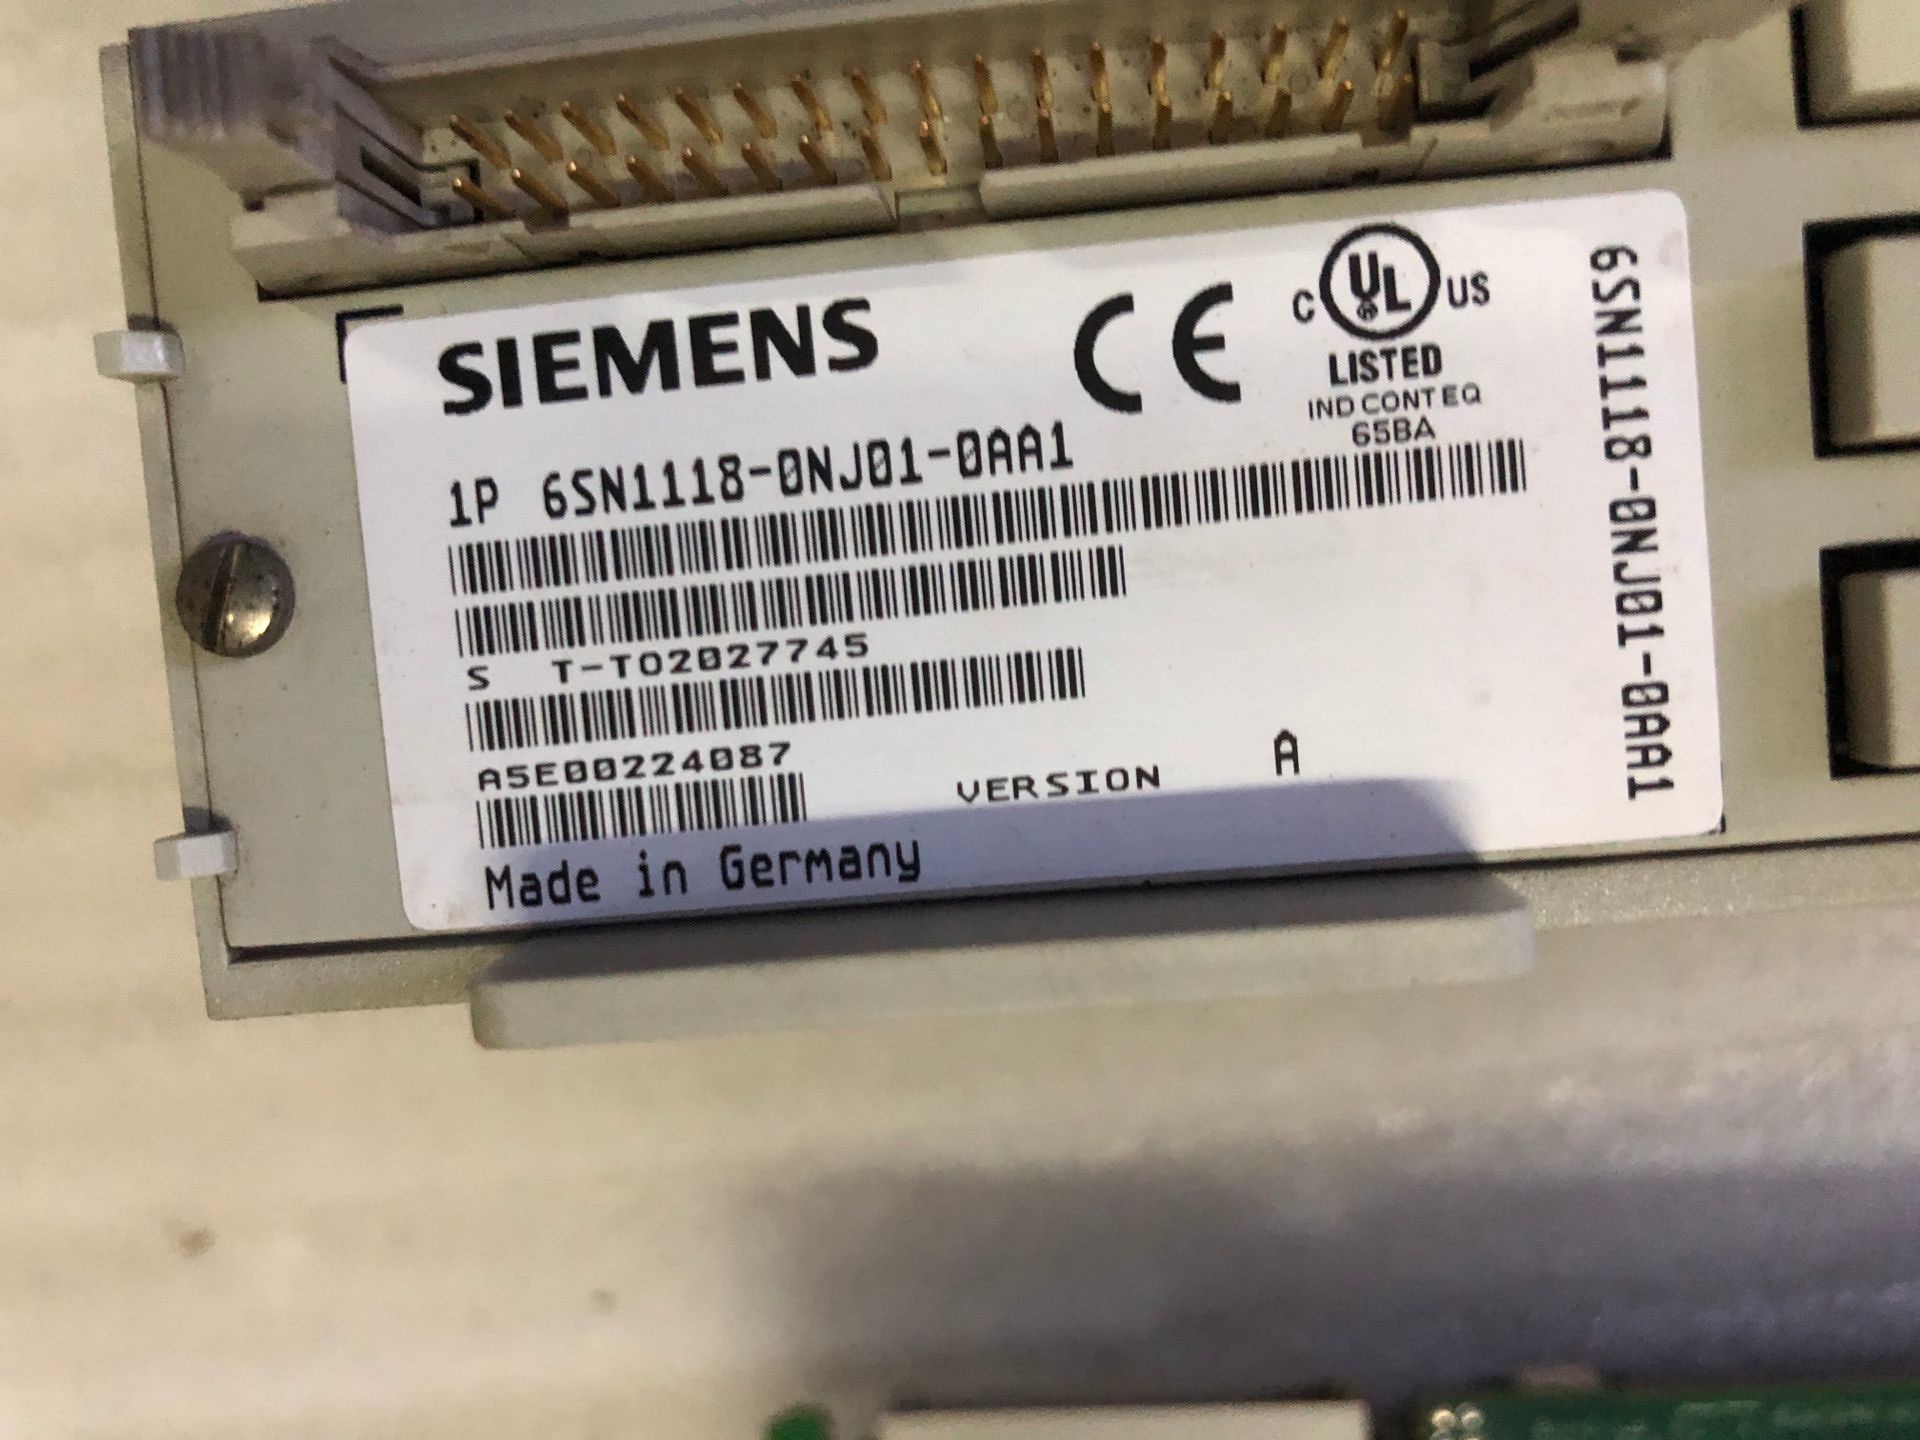 A5E00224087 Siemens axis card 6SN1118-0NJ01-0AA1